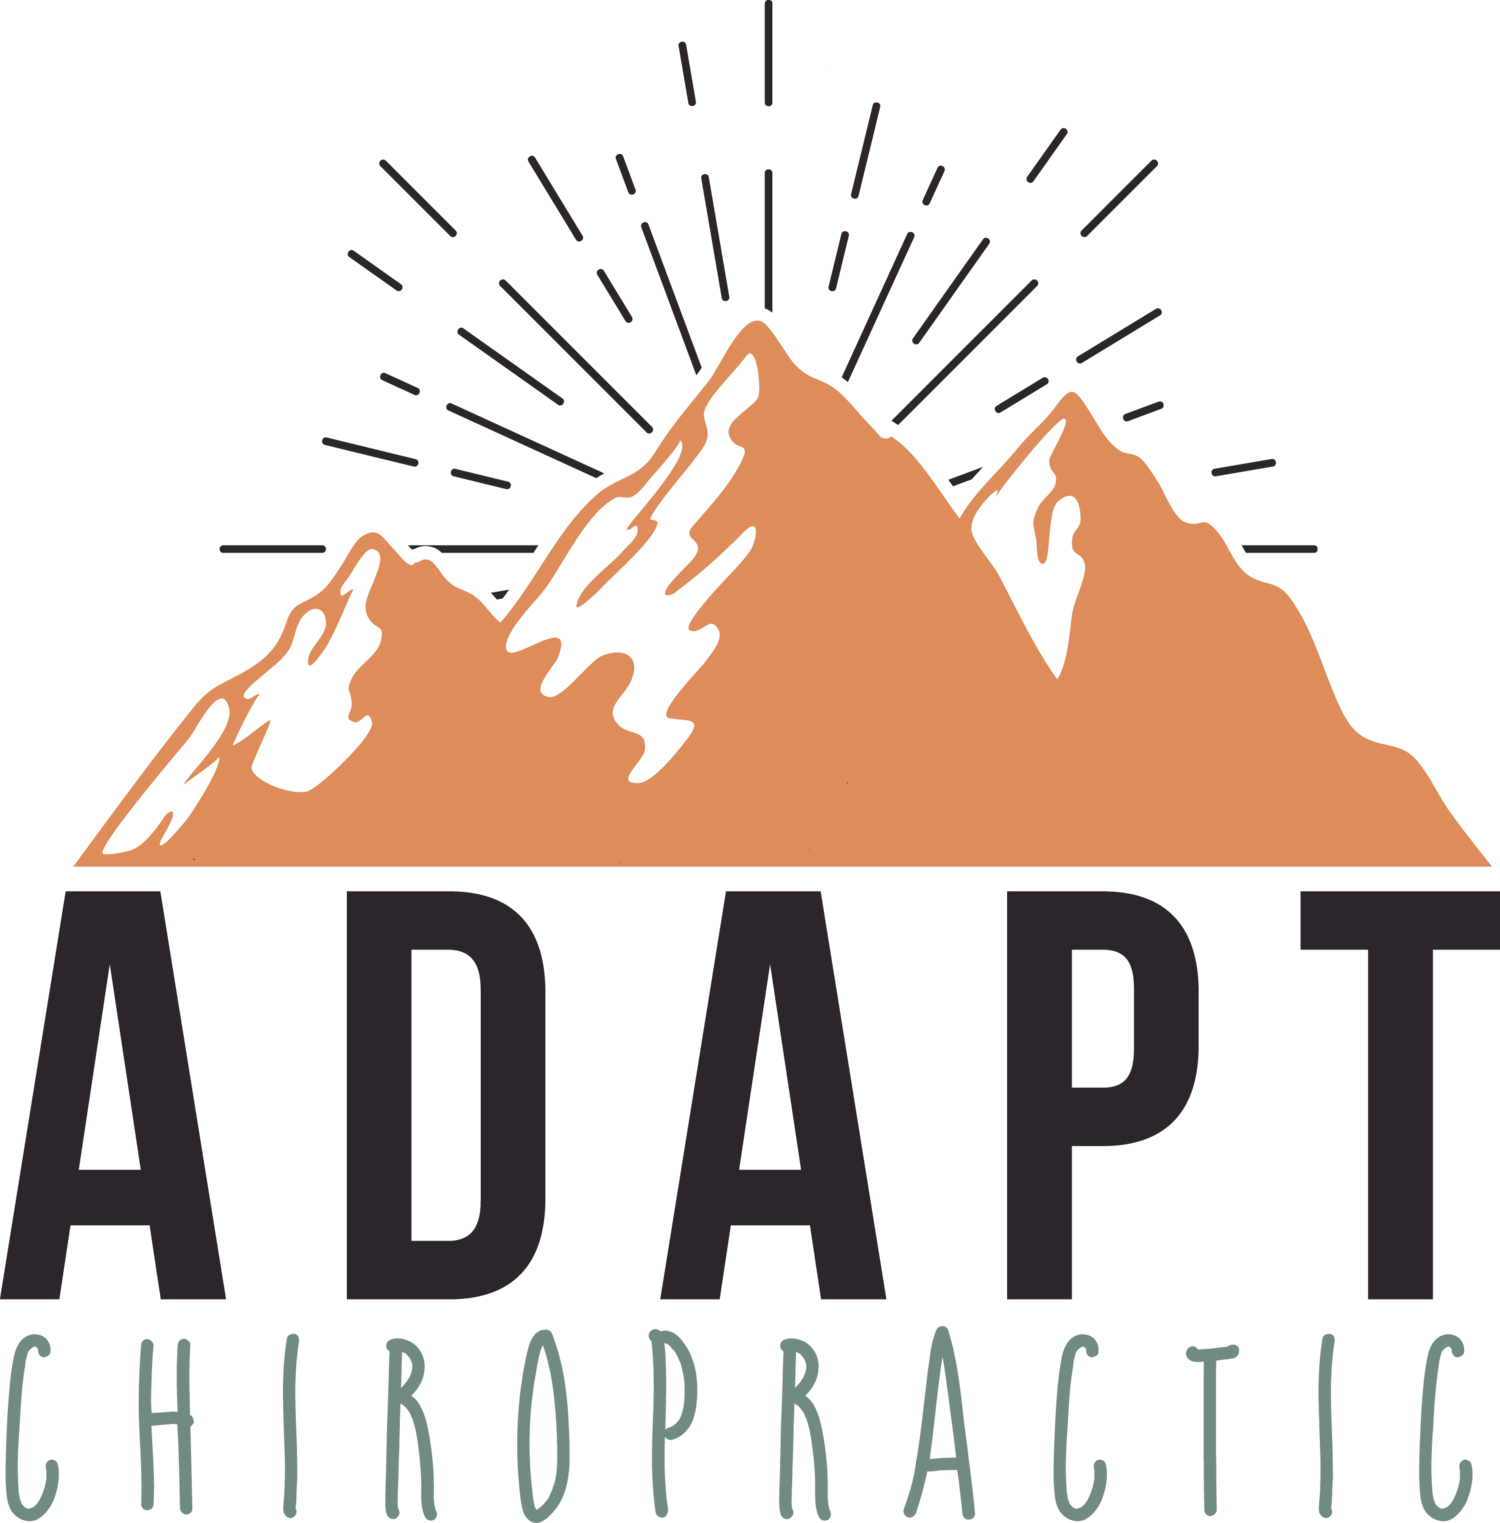 Adapt Chiropractic